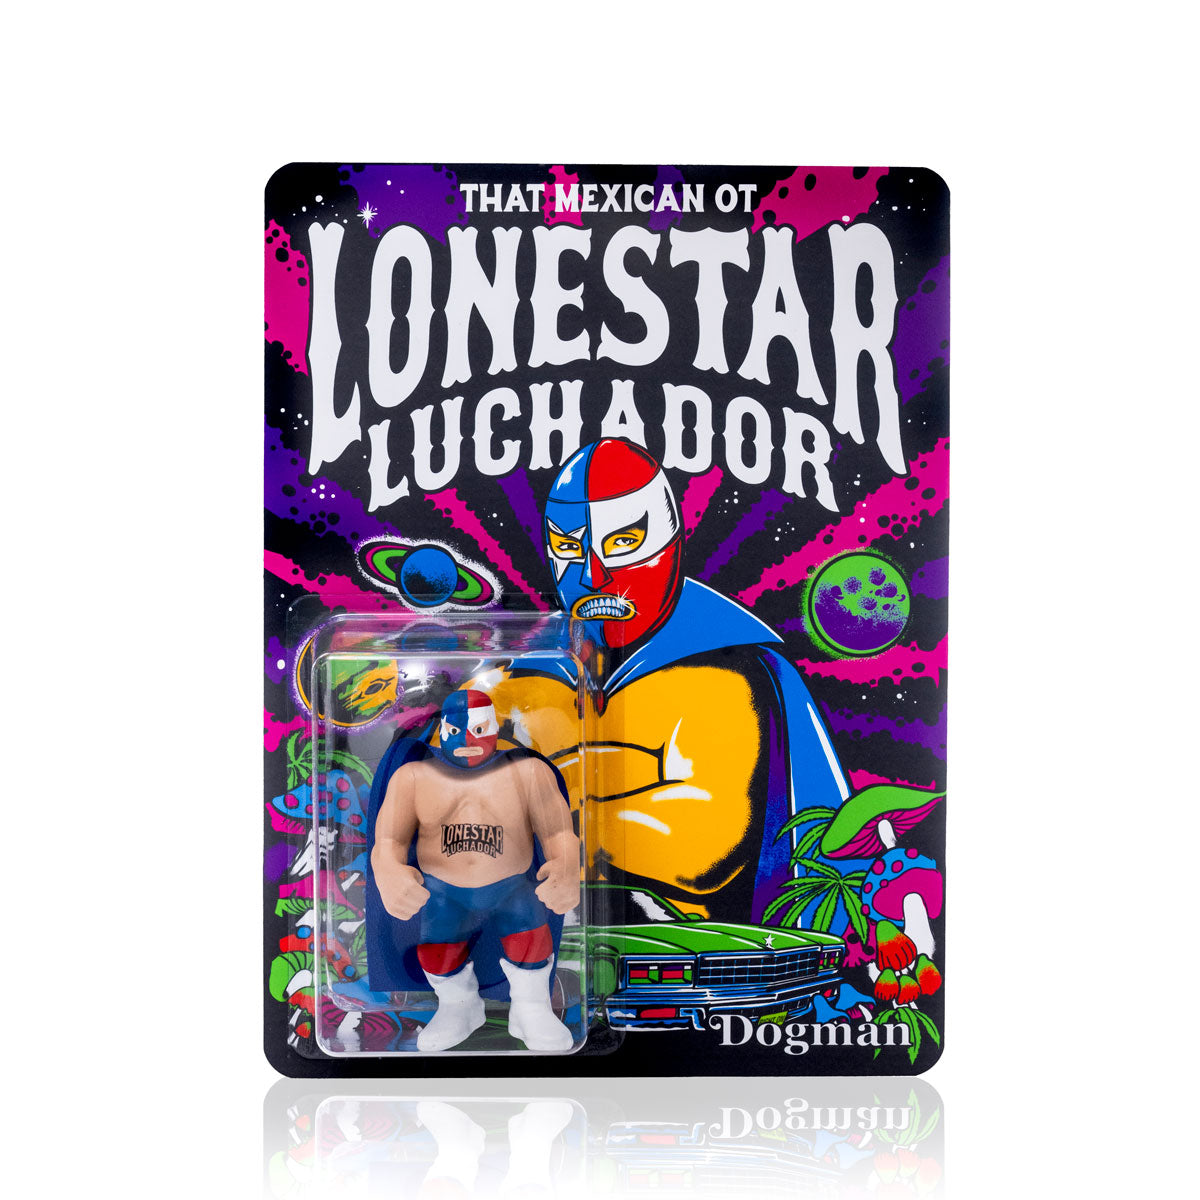 Lonestar Luchador OT Toy